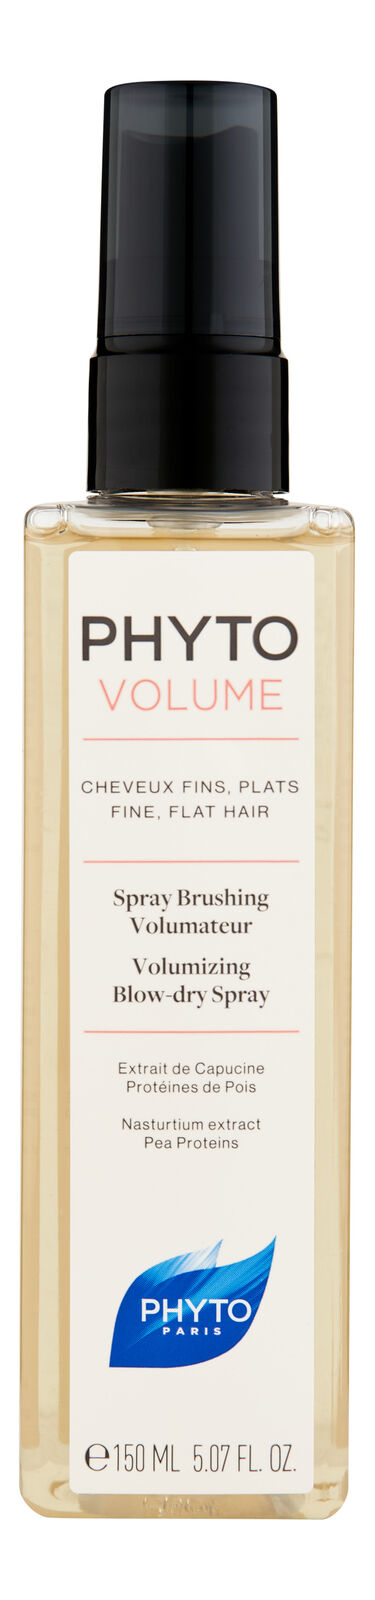 Phyto Phytovolume Volumizing Blow Dry Spray 5.07 oz 150 ml. Hair Styling Product